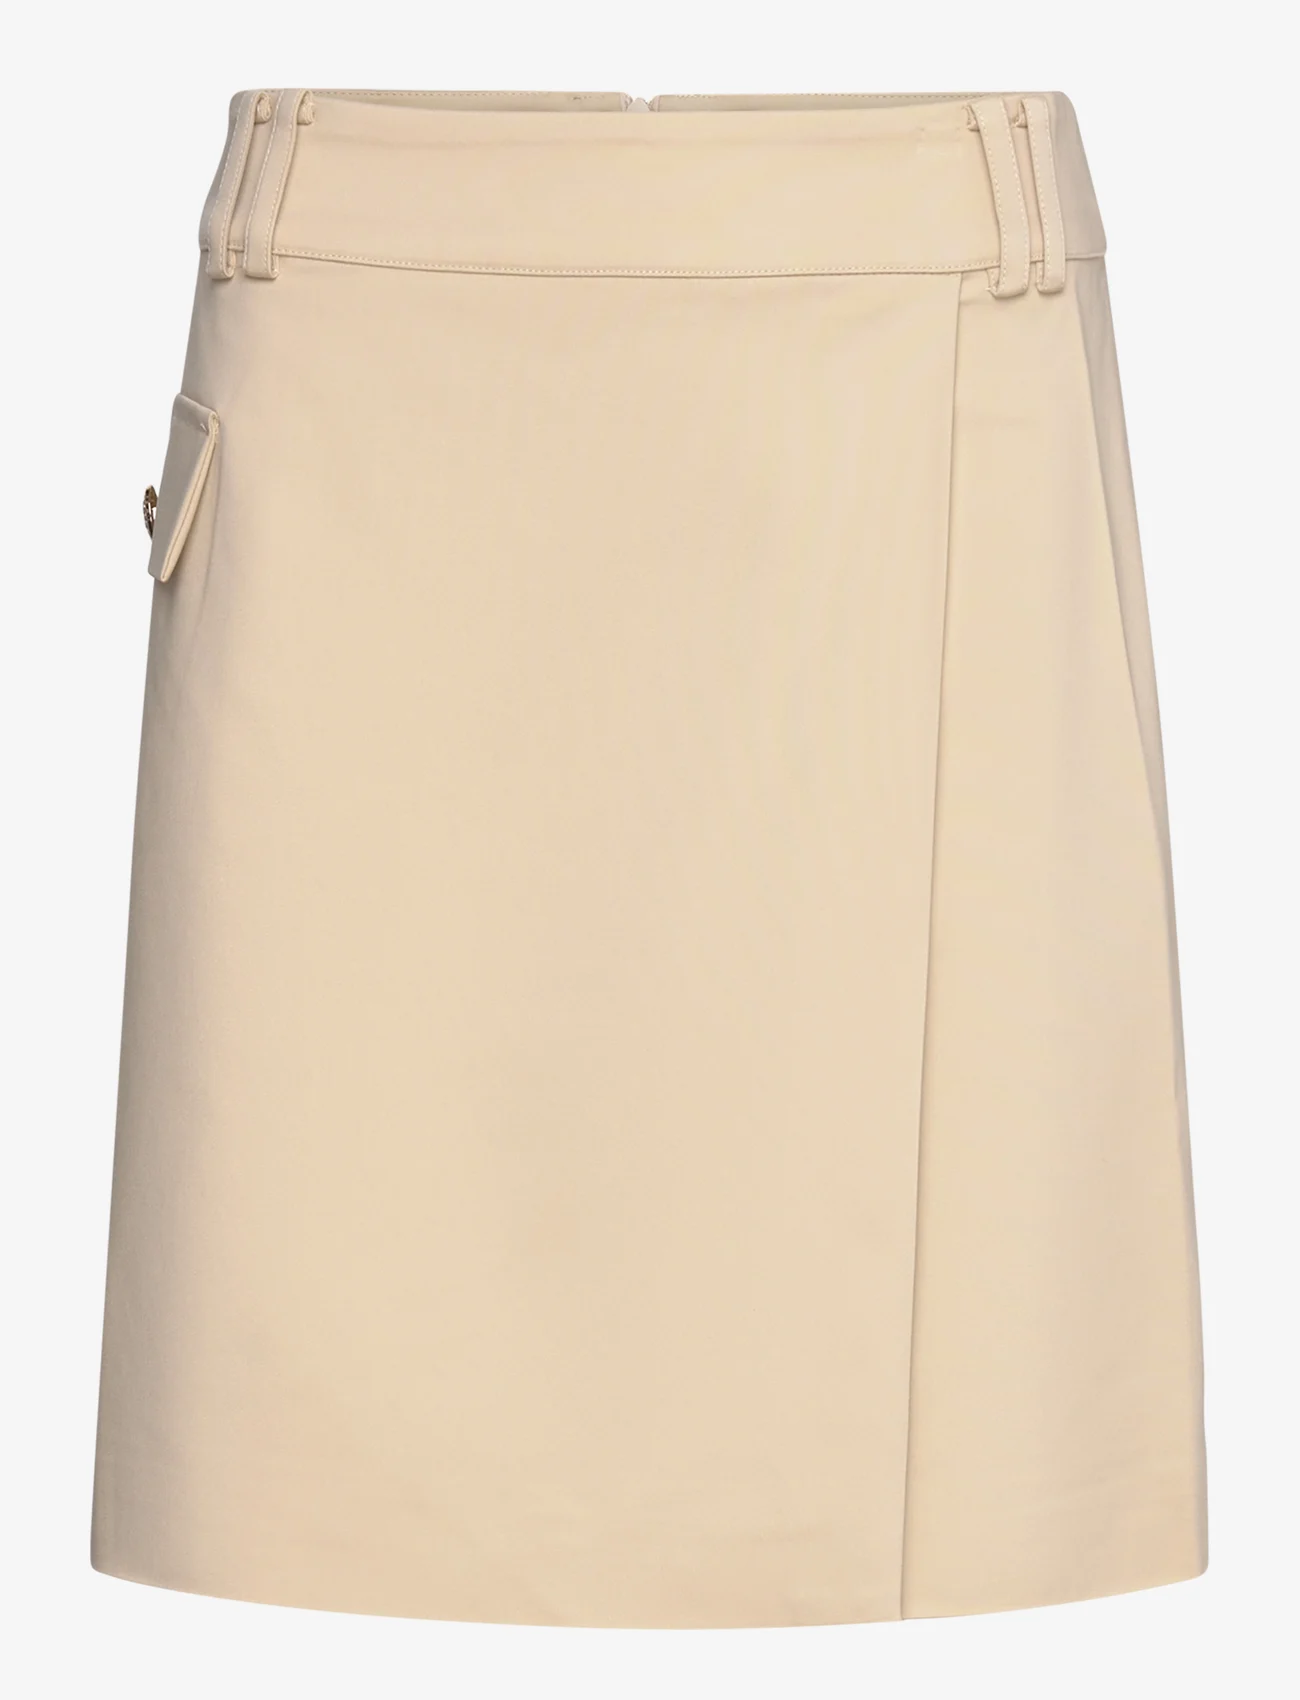 Coster Copenhagen - Short skirt with utility details - mägi seelikud - creme - 0